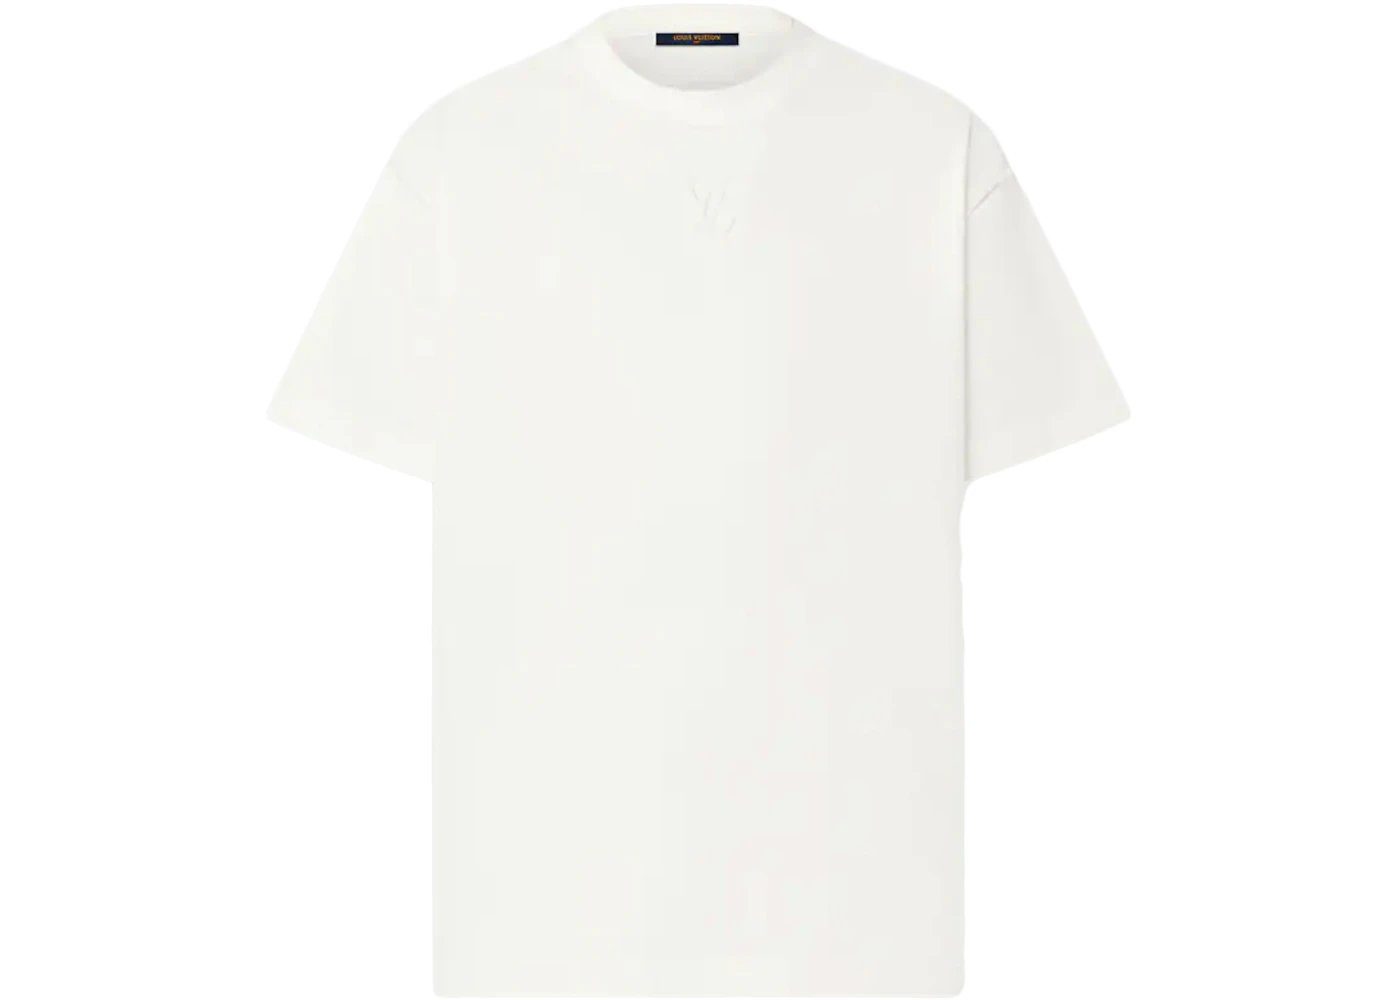 white and black louis vuitton shirt